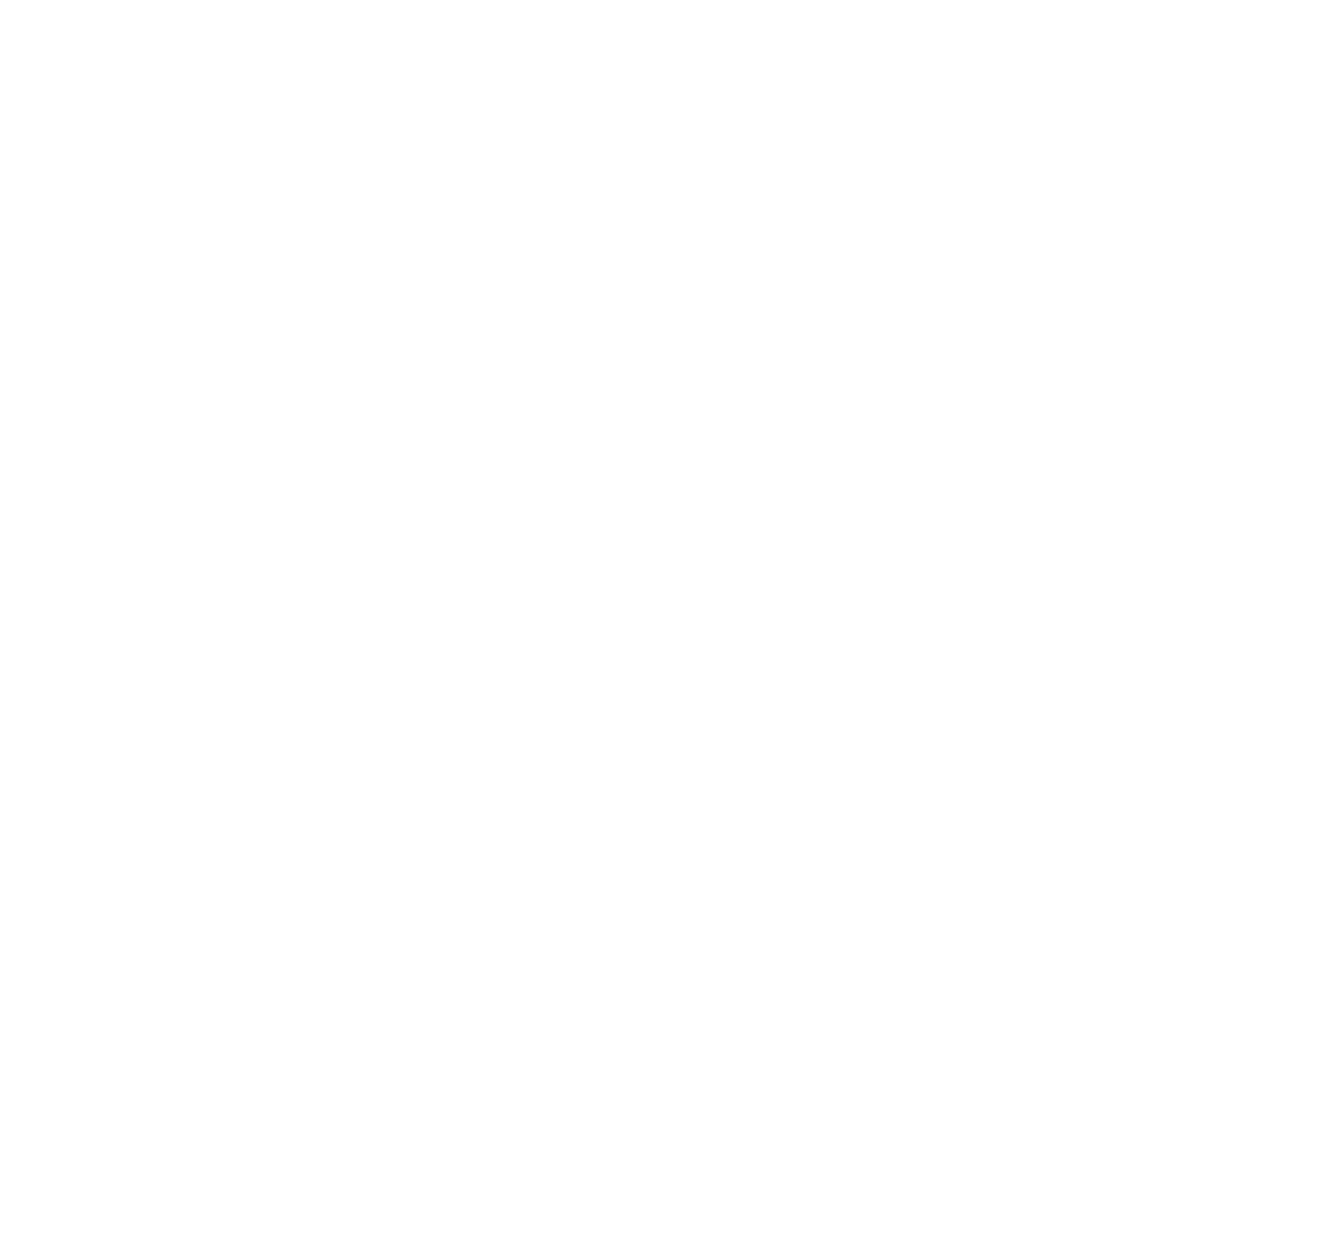 Goals for Girls